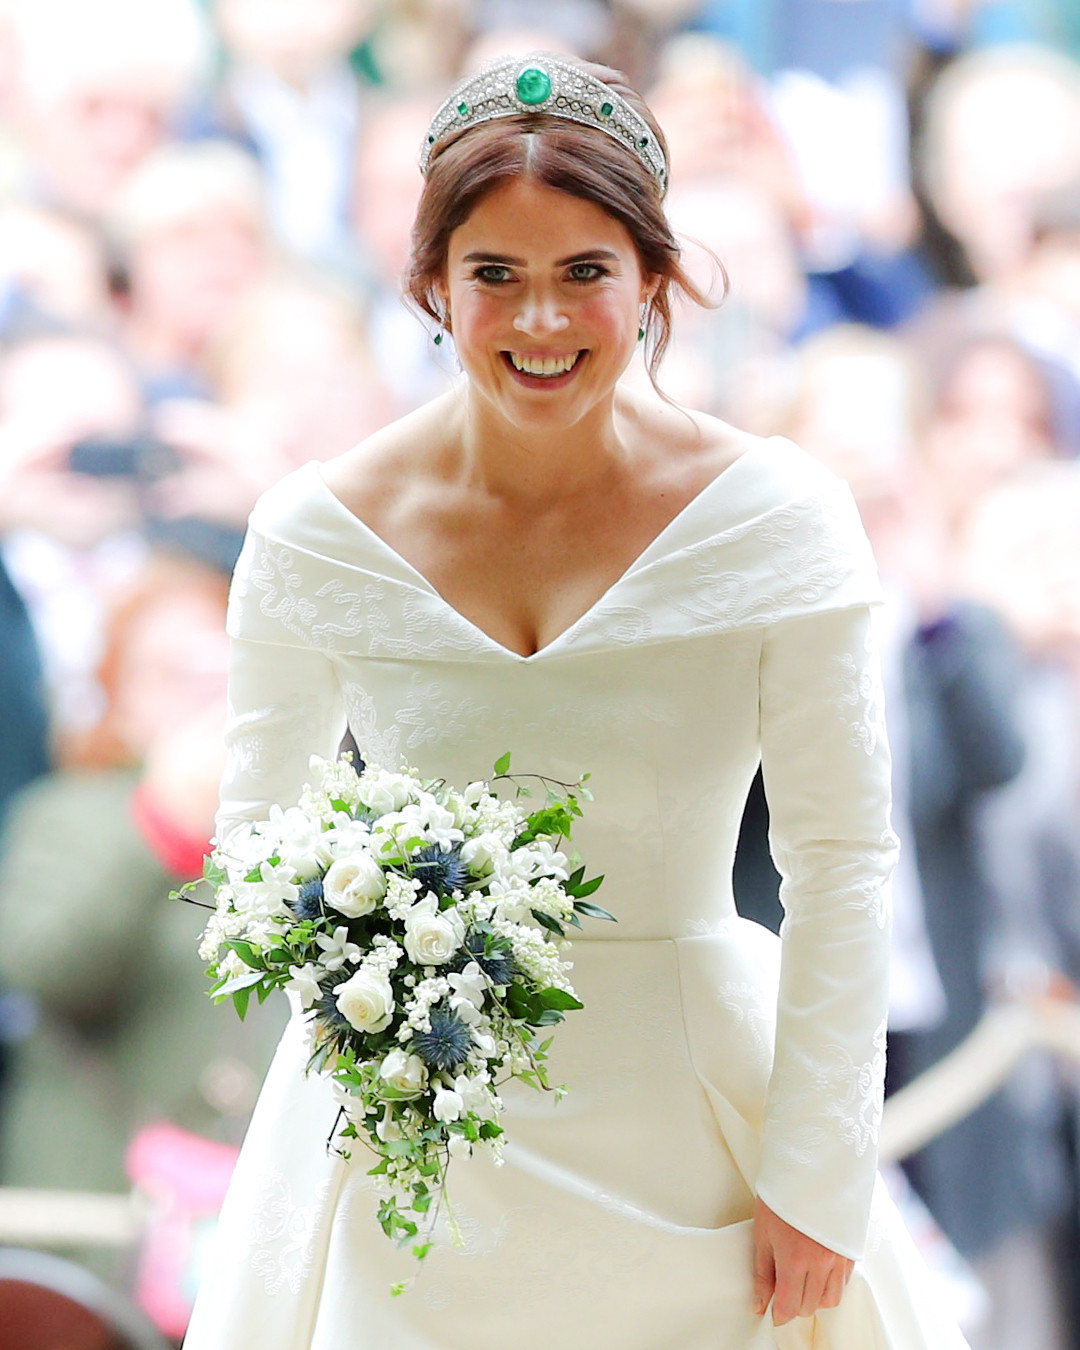 Princess Eugenie's Royal Wedding Bouquet: All the Details